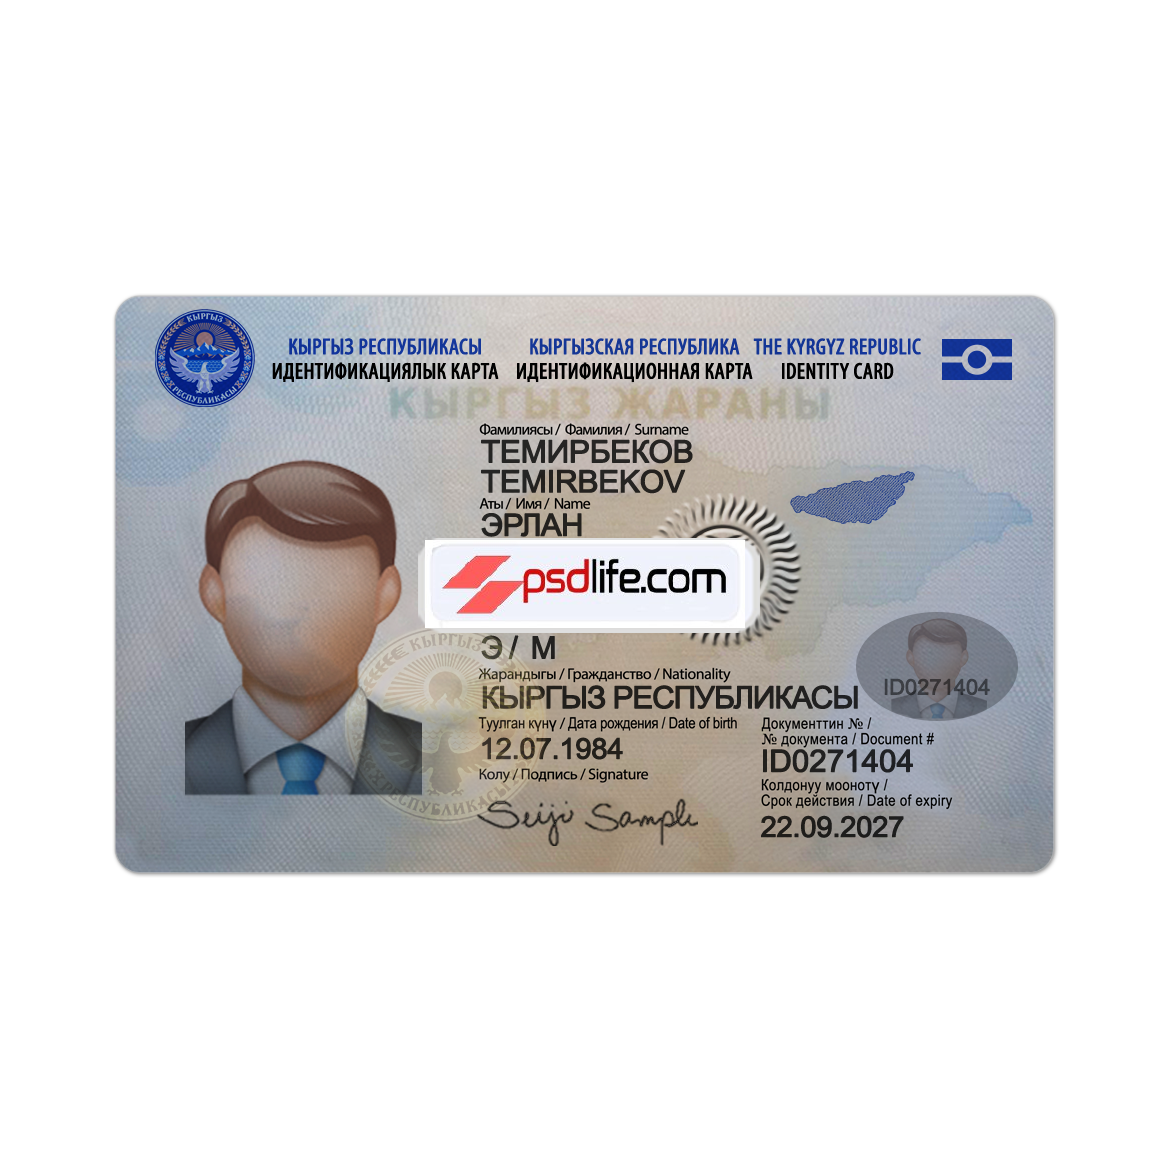 Kyrgyzstan ID card psd template full editabale | Kyrgyzstan id card Template photoshop use for | ID Card Number Kyrgyzstan | Кыргызстан ID CARD жасалма Psd шаблон түзөтүү акысыз жүктөп алуу